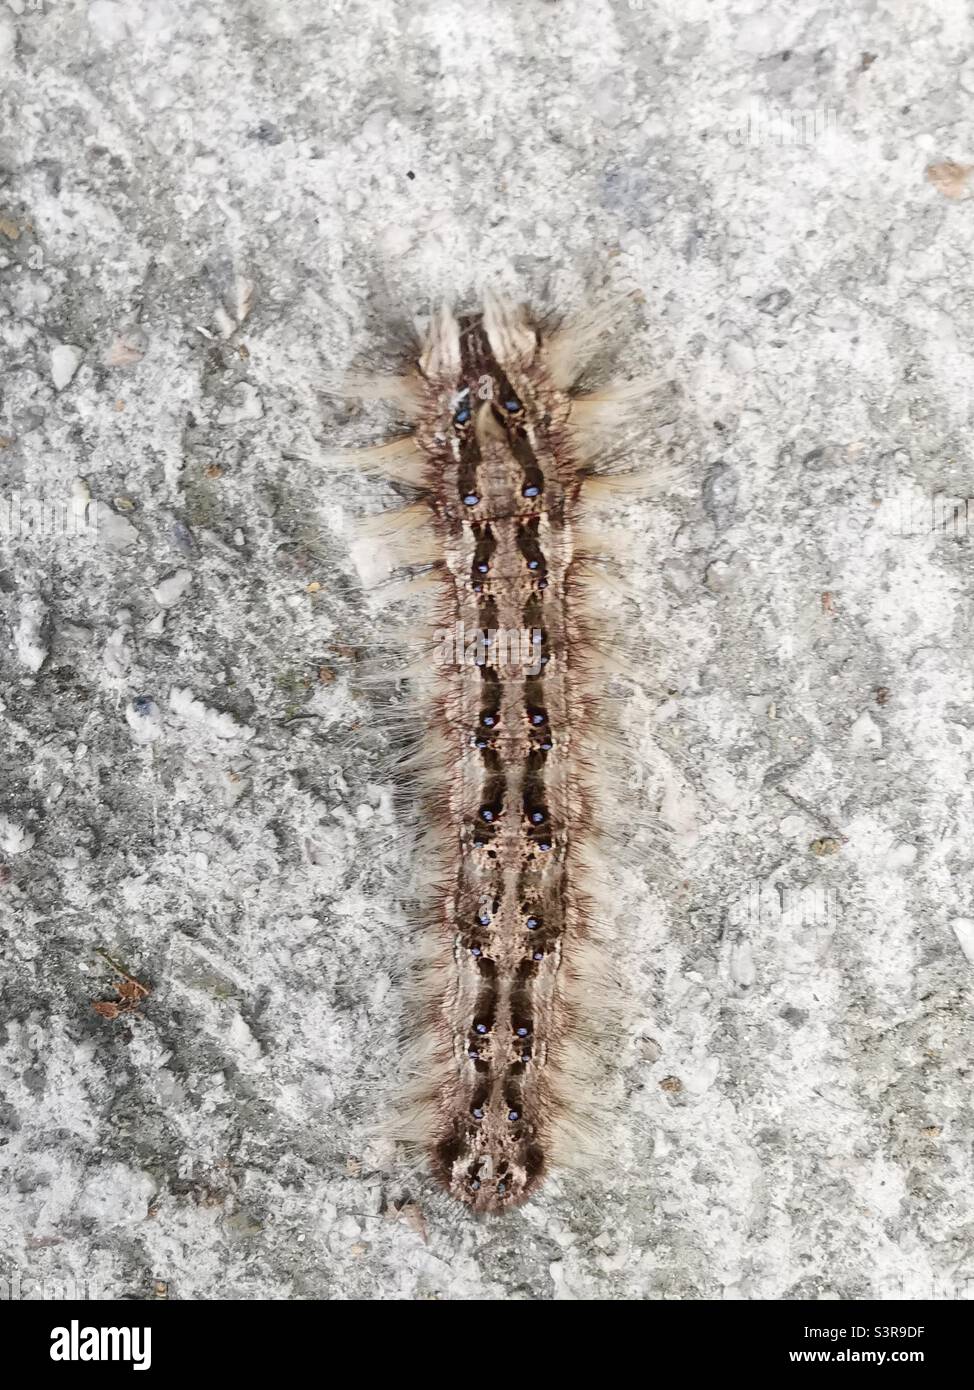 A closeup shot of a fuzzy caterpillar taken on Lamma island in Hong Kong. Stock Photo